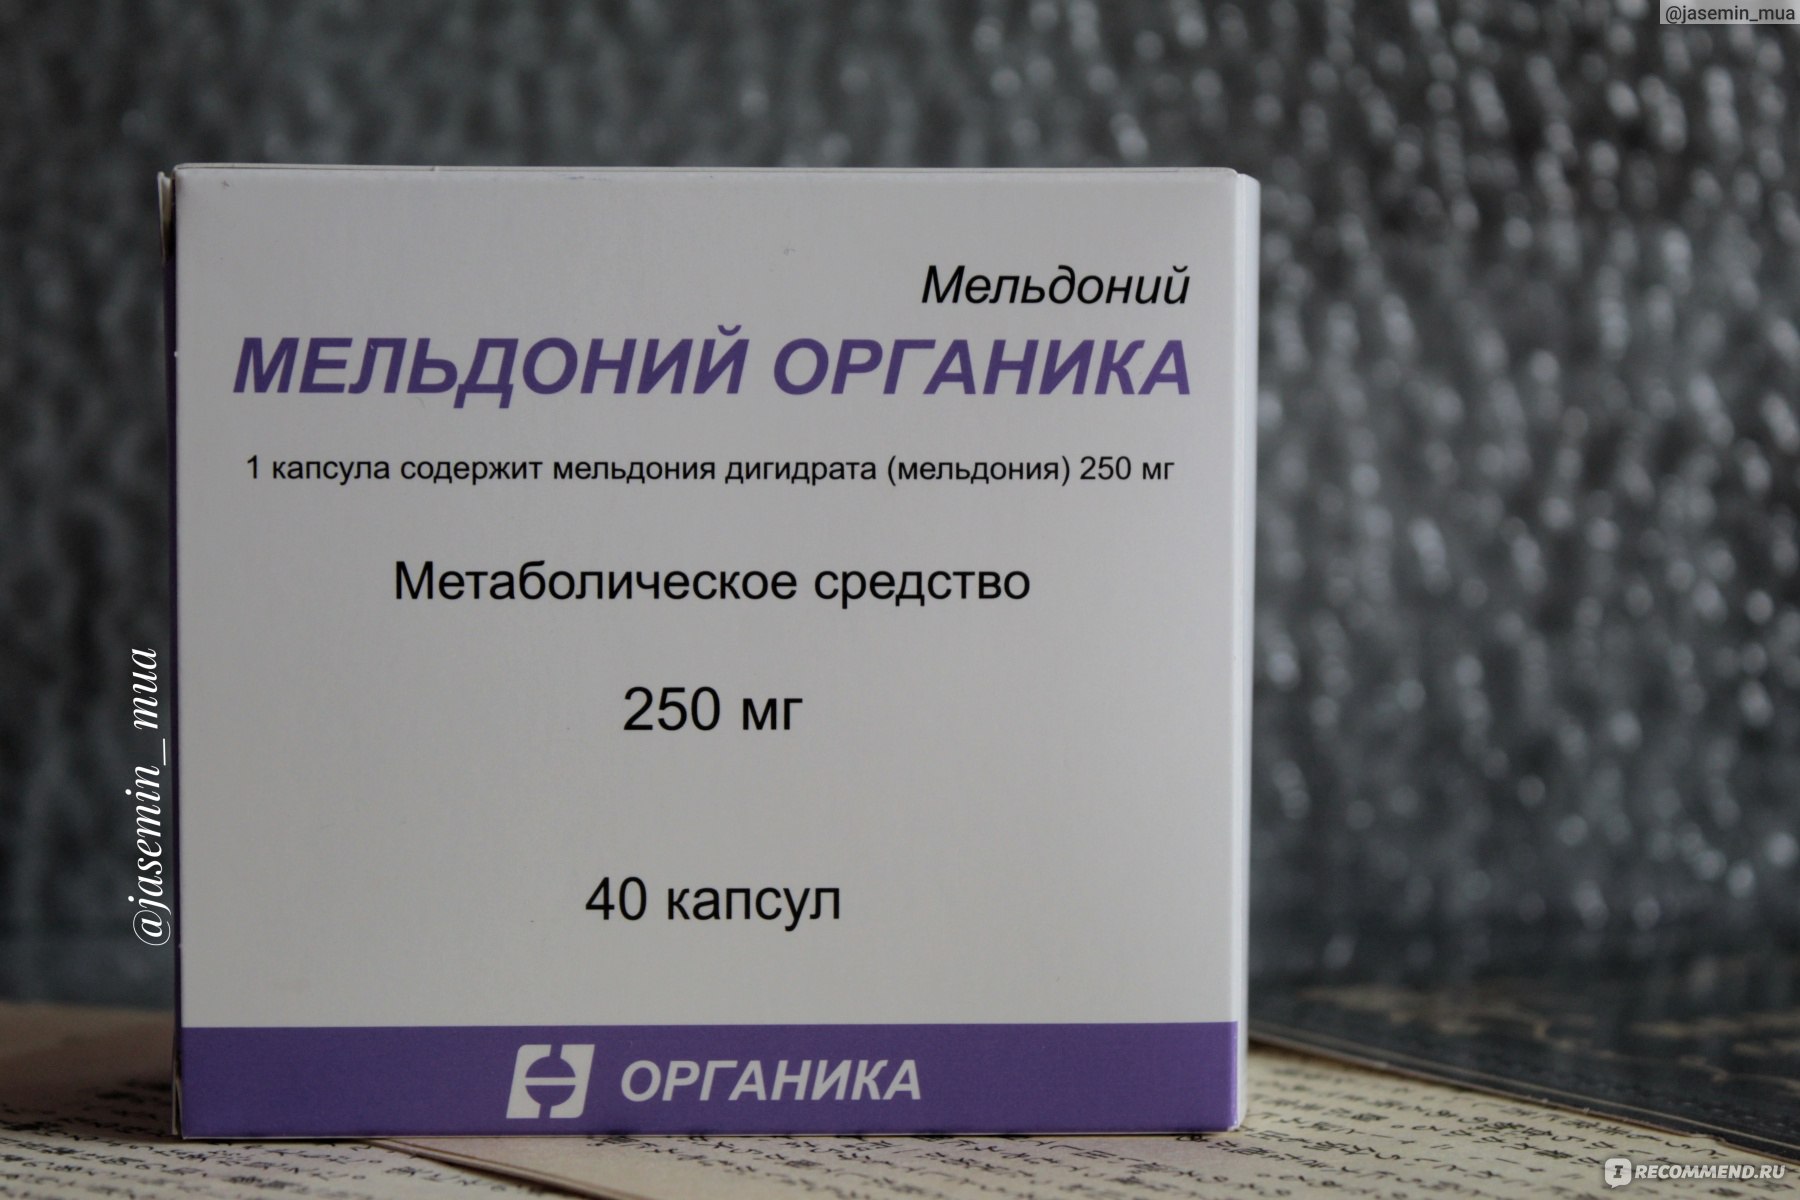 Аналог милдроната в таблетках. Мельдоний 500 мг органика. Мельдоний 250 органика. Мельдоний 250 мг органика. Мельдоний органика капсулы.